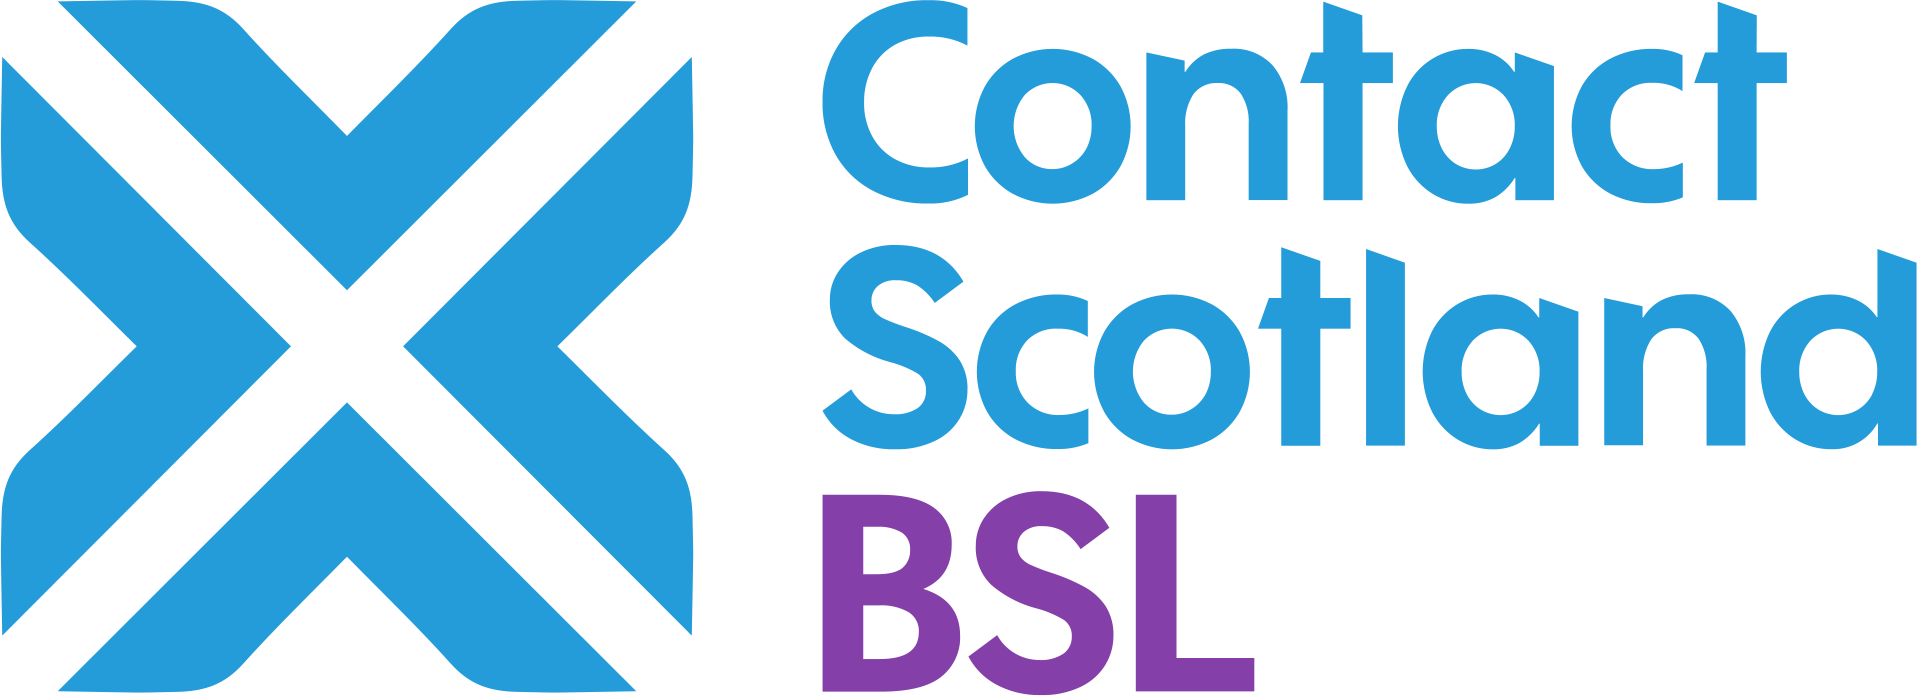 Contact Scotland BSL - contact us through a sign language interpreter